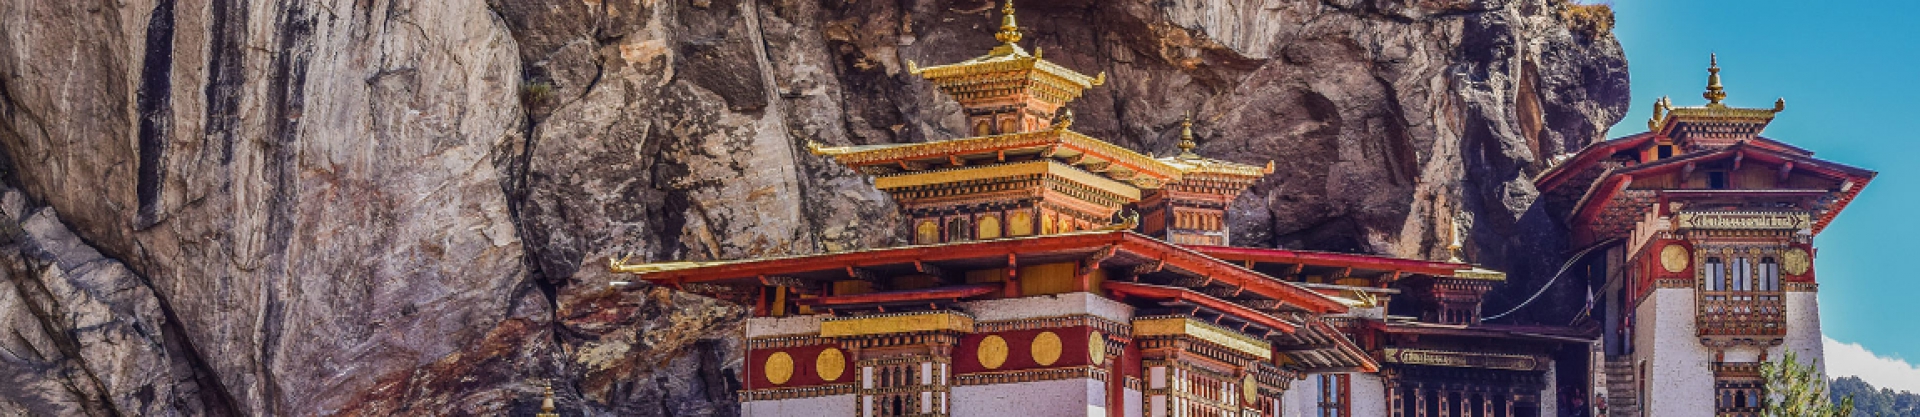 Phuentsholing 1N - Thimphu 2N - Wangdue or Punakha 1N – Paro 3N